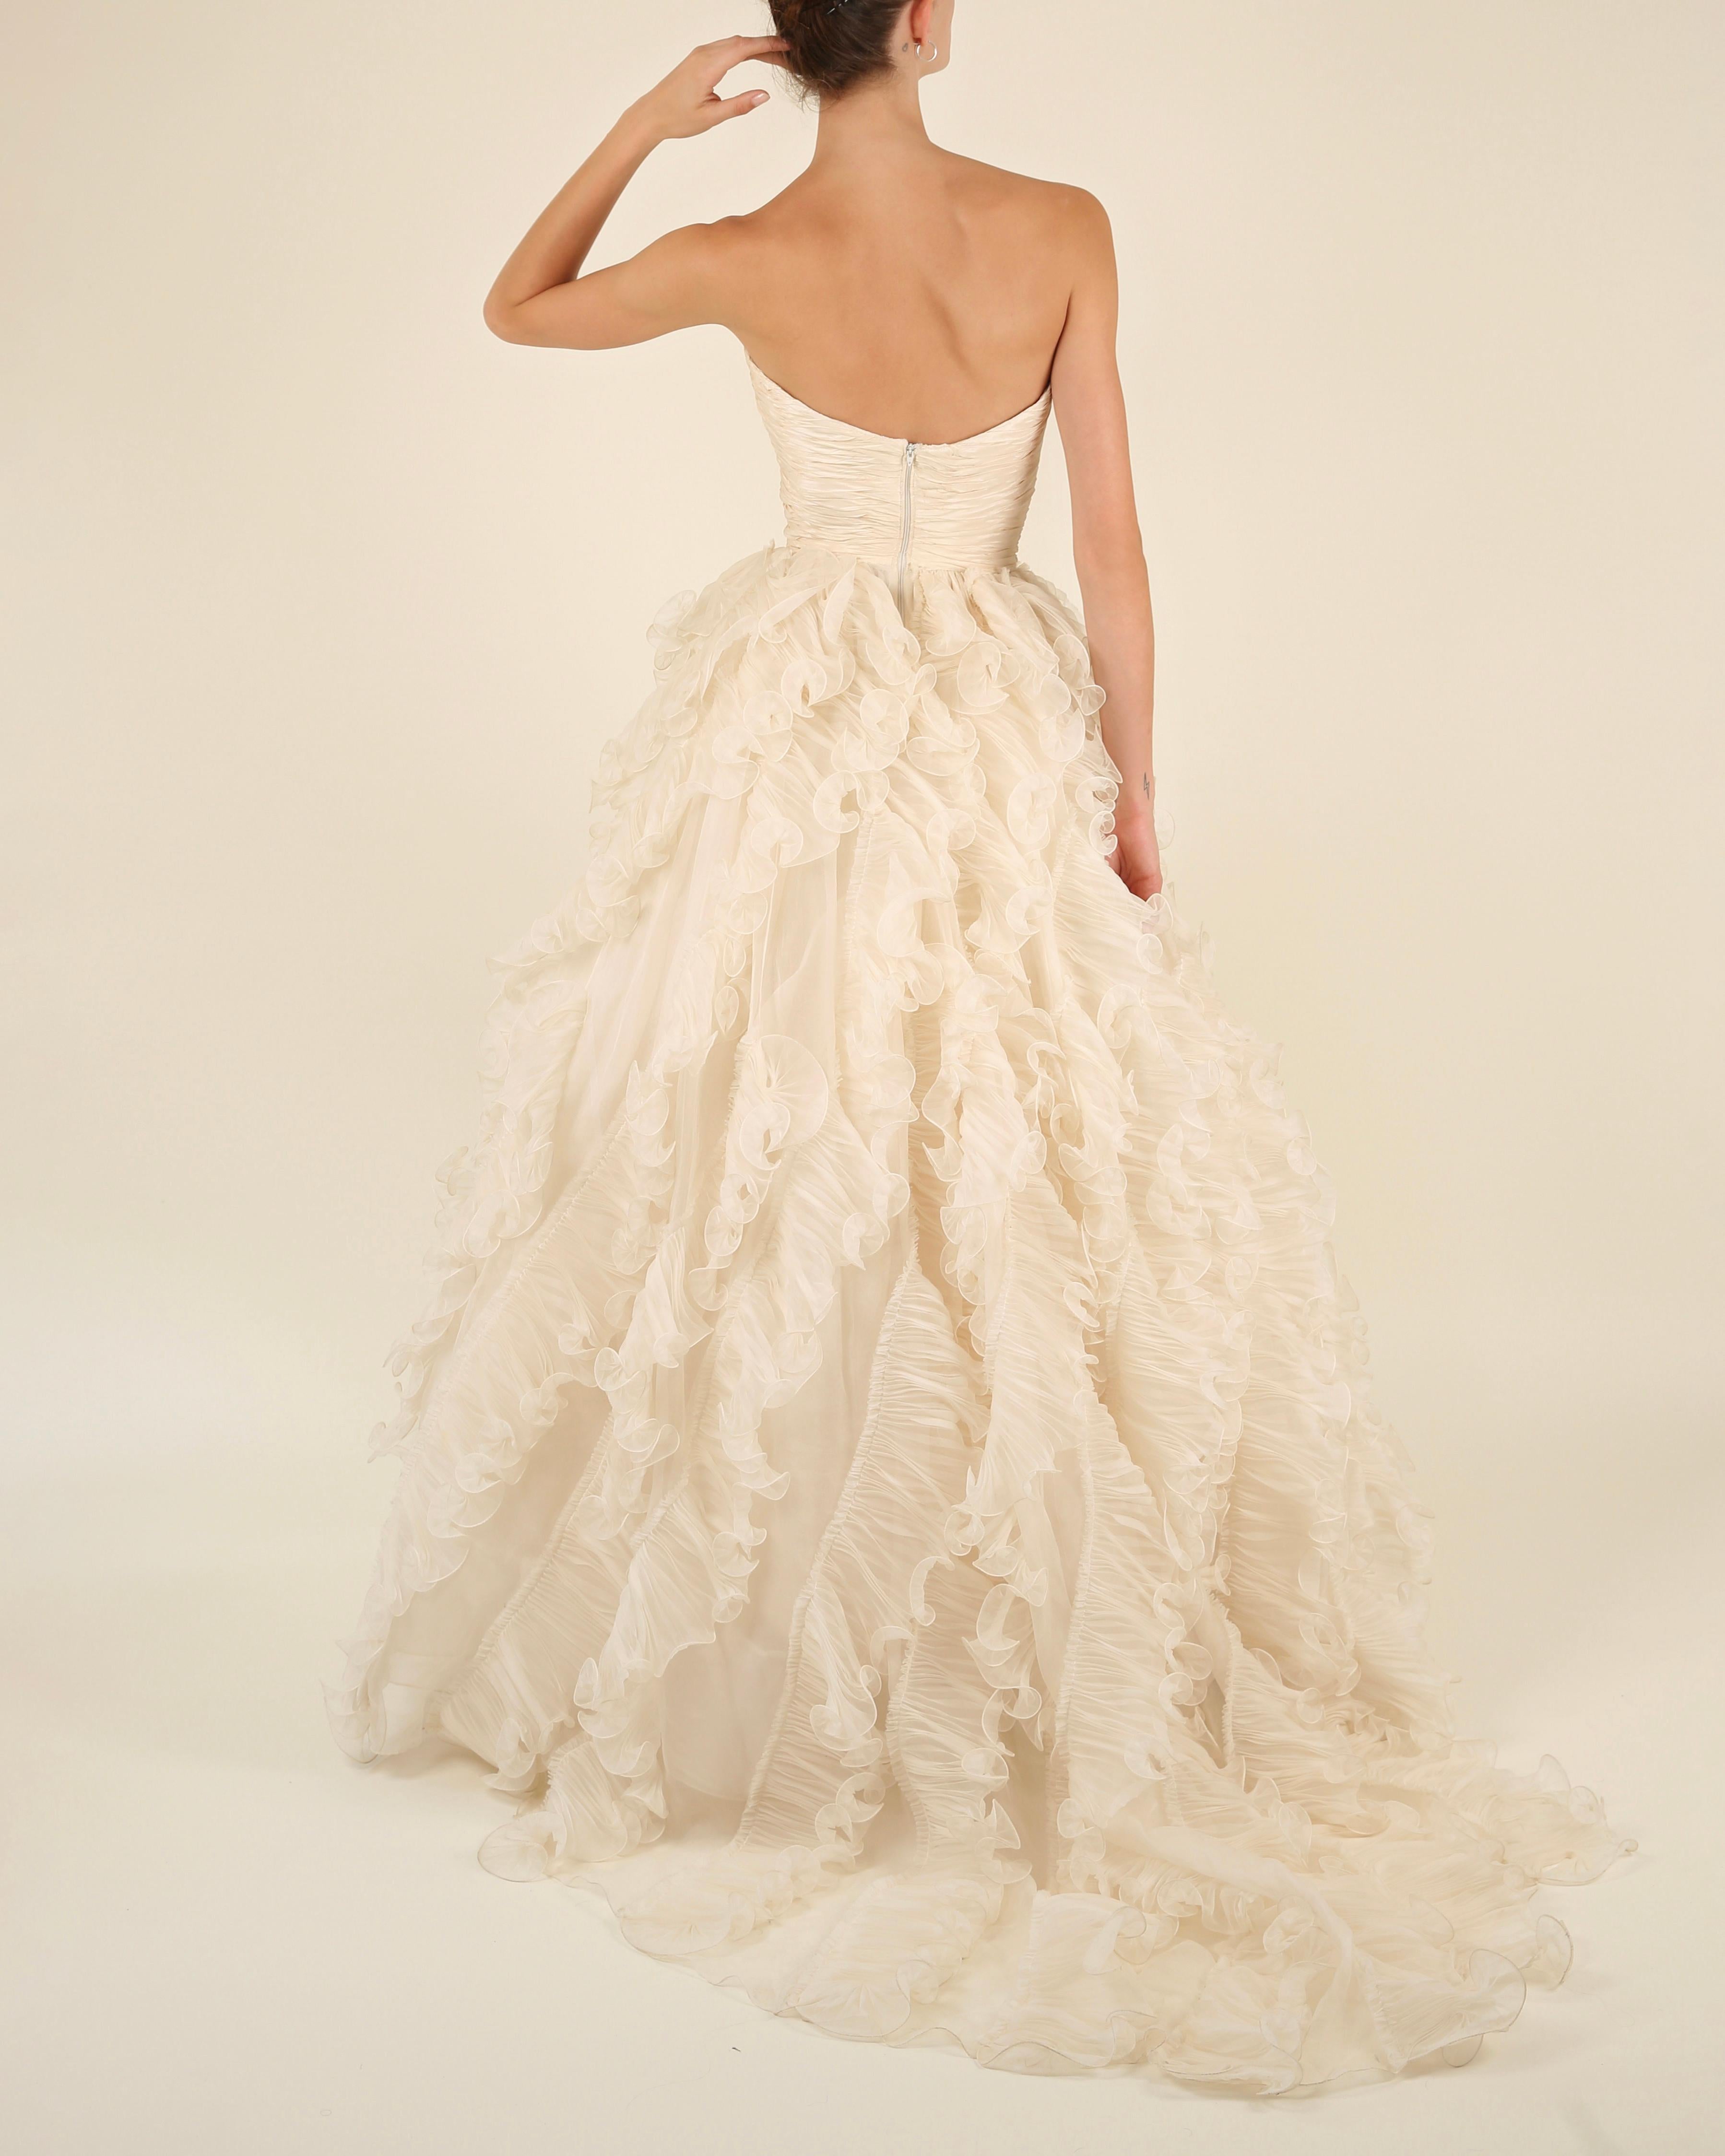 Oscar de la Renta S/S08 bridal ivory strapless vintage ruffle wedding dress gown For Sale 10